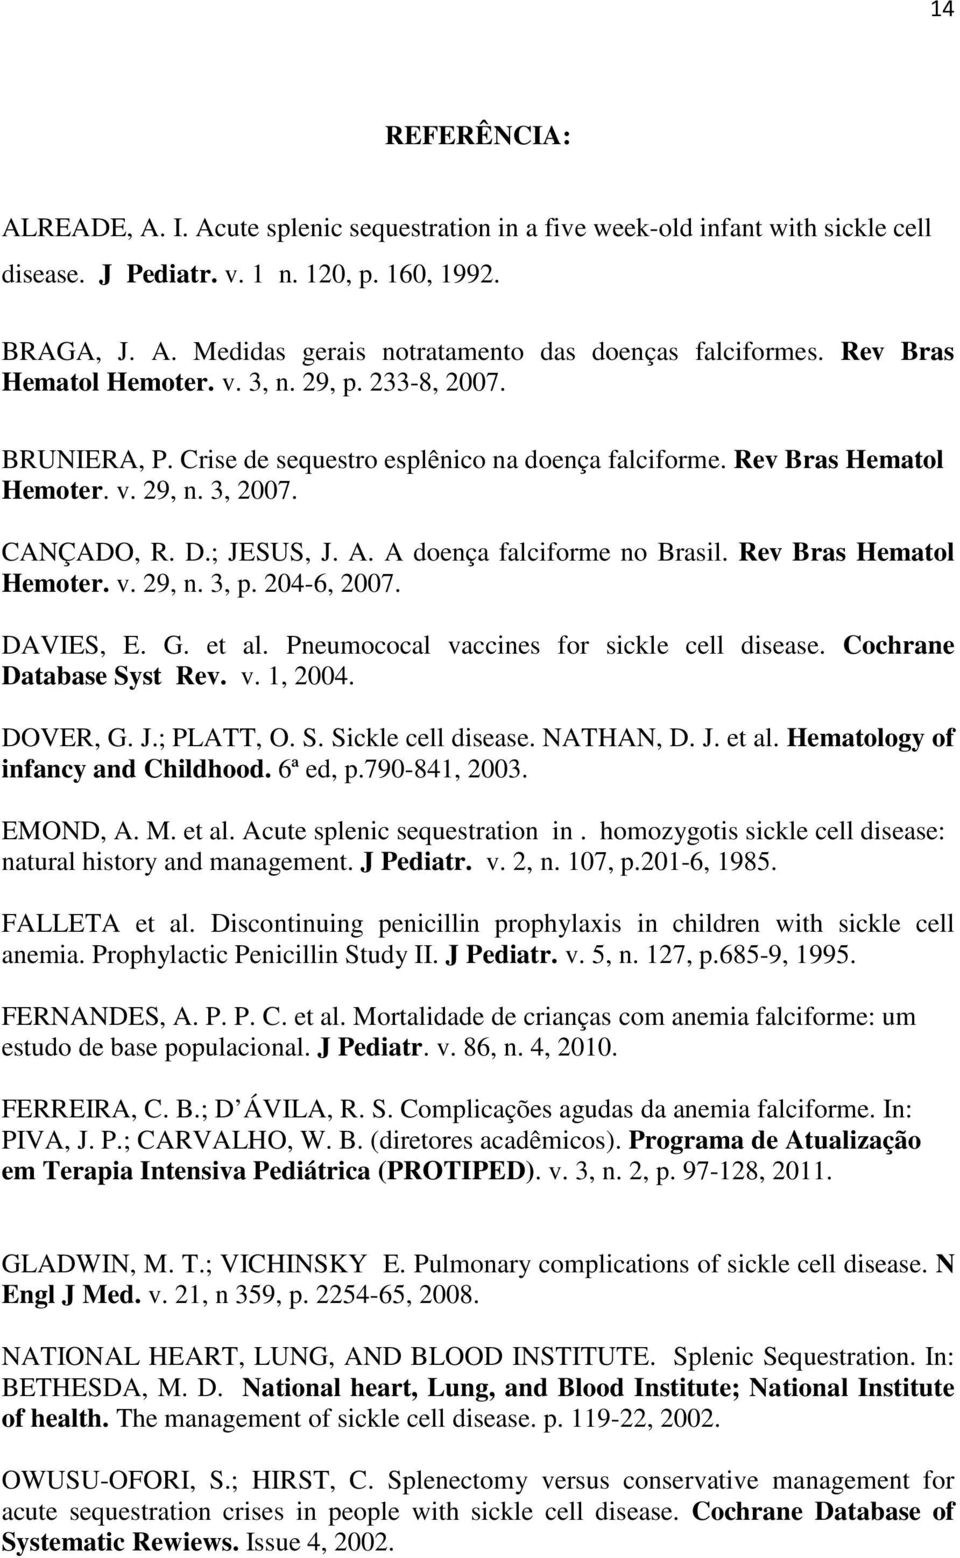 A doença falciforme no Brasil. Rev Bras Hematol Hemoter. v. 29, n. 3, p. 204-6, 2007. DAVIES, E. G. et al. Pneumococal vaccines for sickle cell disease. Cochrane Database Syst Rev. v. 1, 2004.